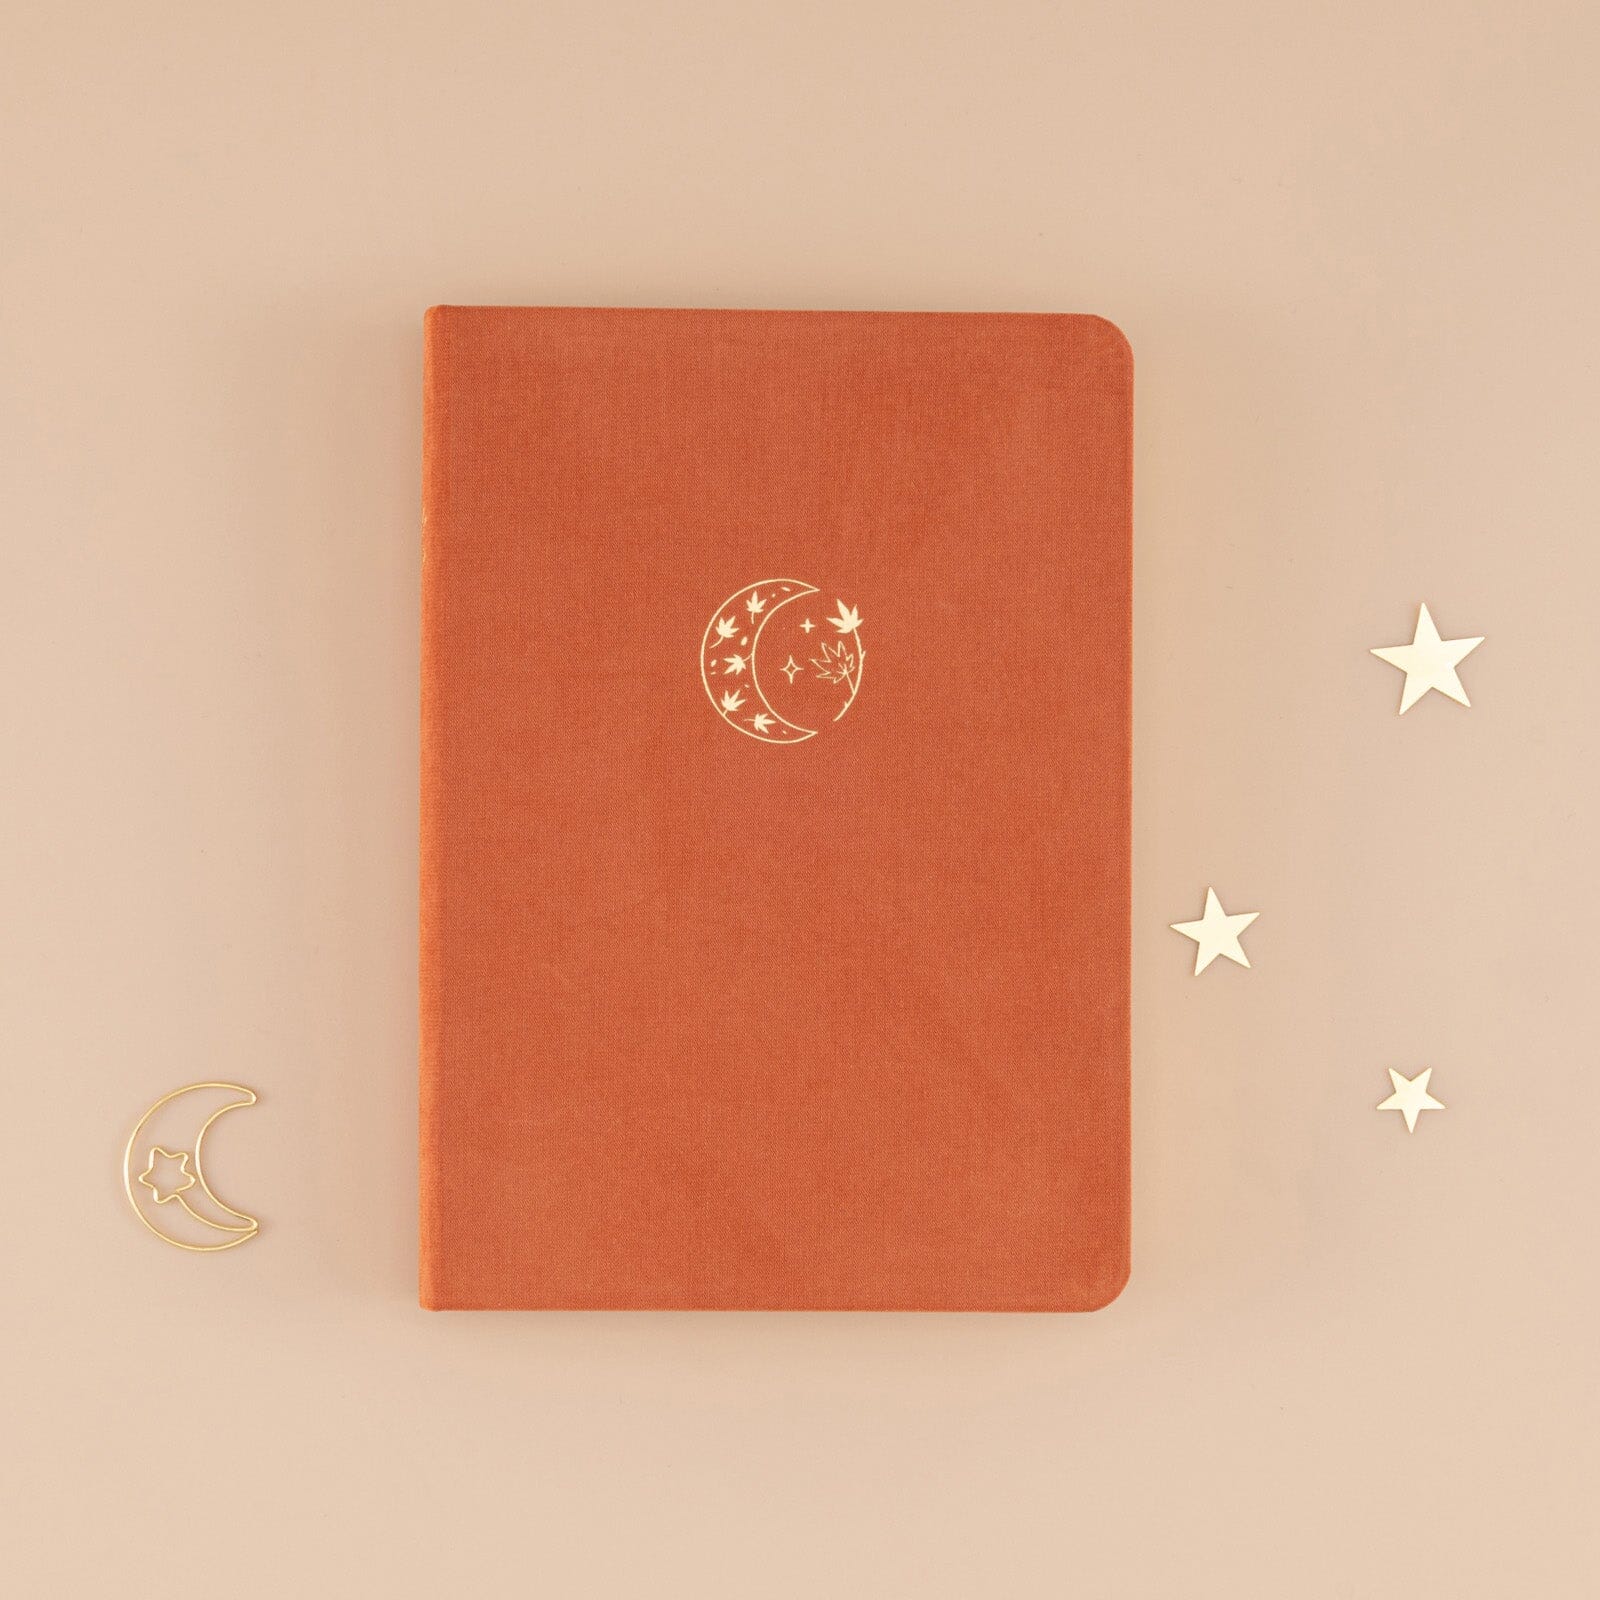 Tsuki ‘Maple Moon’ Limited Edition Bullet Journal ☾